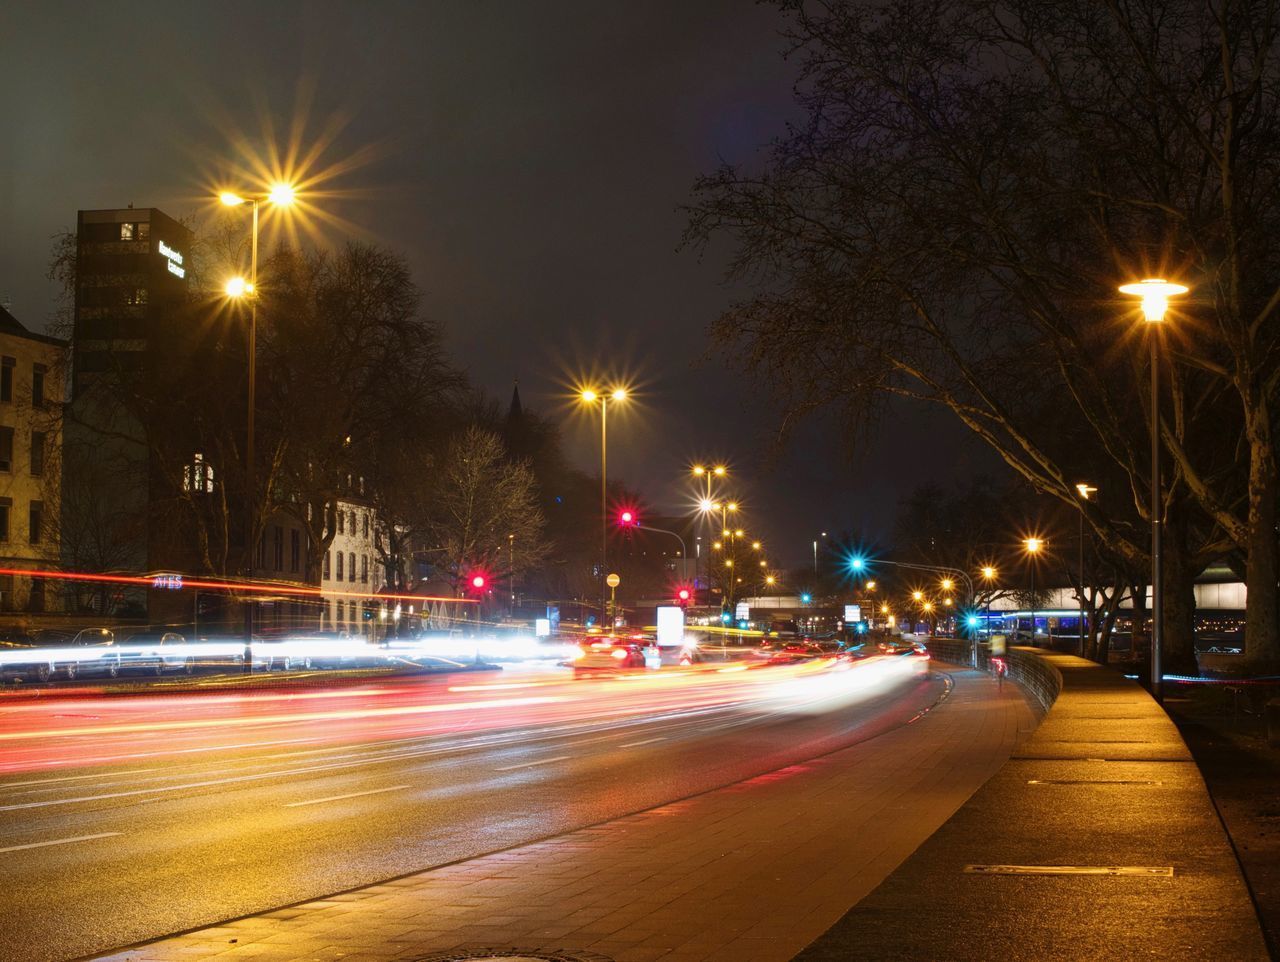 LIGHT TRAILS ON ROAD ALONG ILLUMINATED STREET LIGHTS AT NIGHT